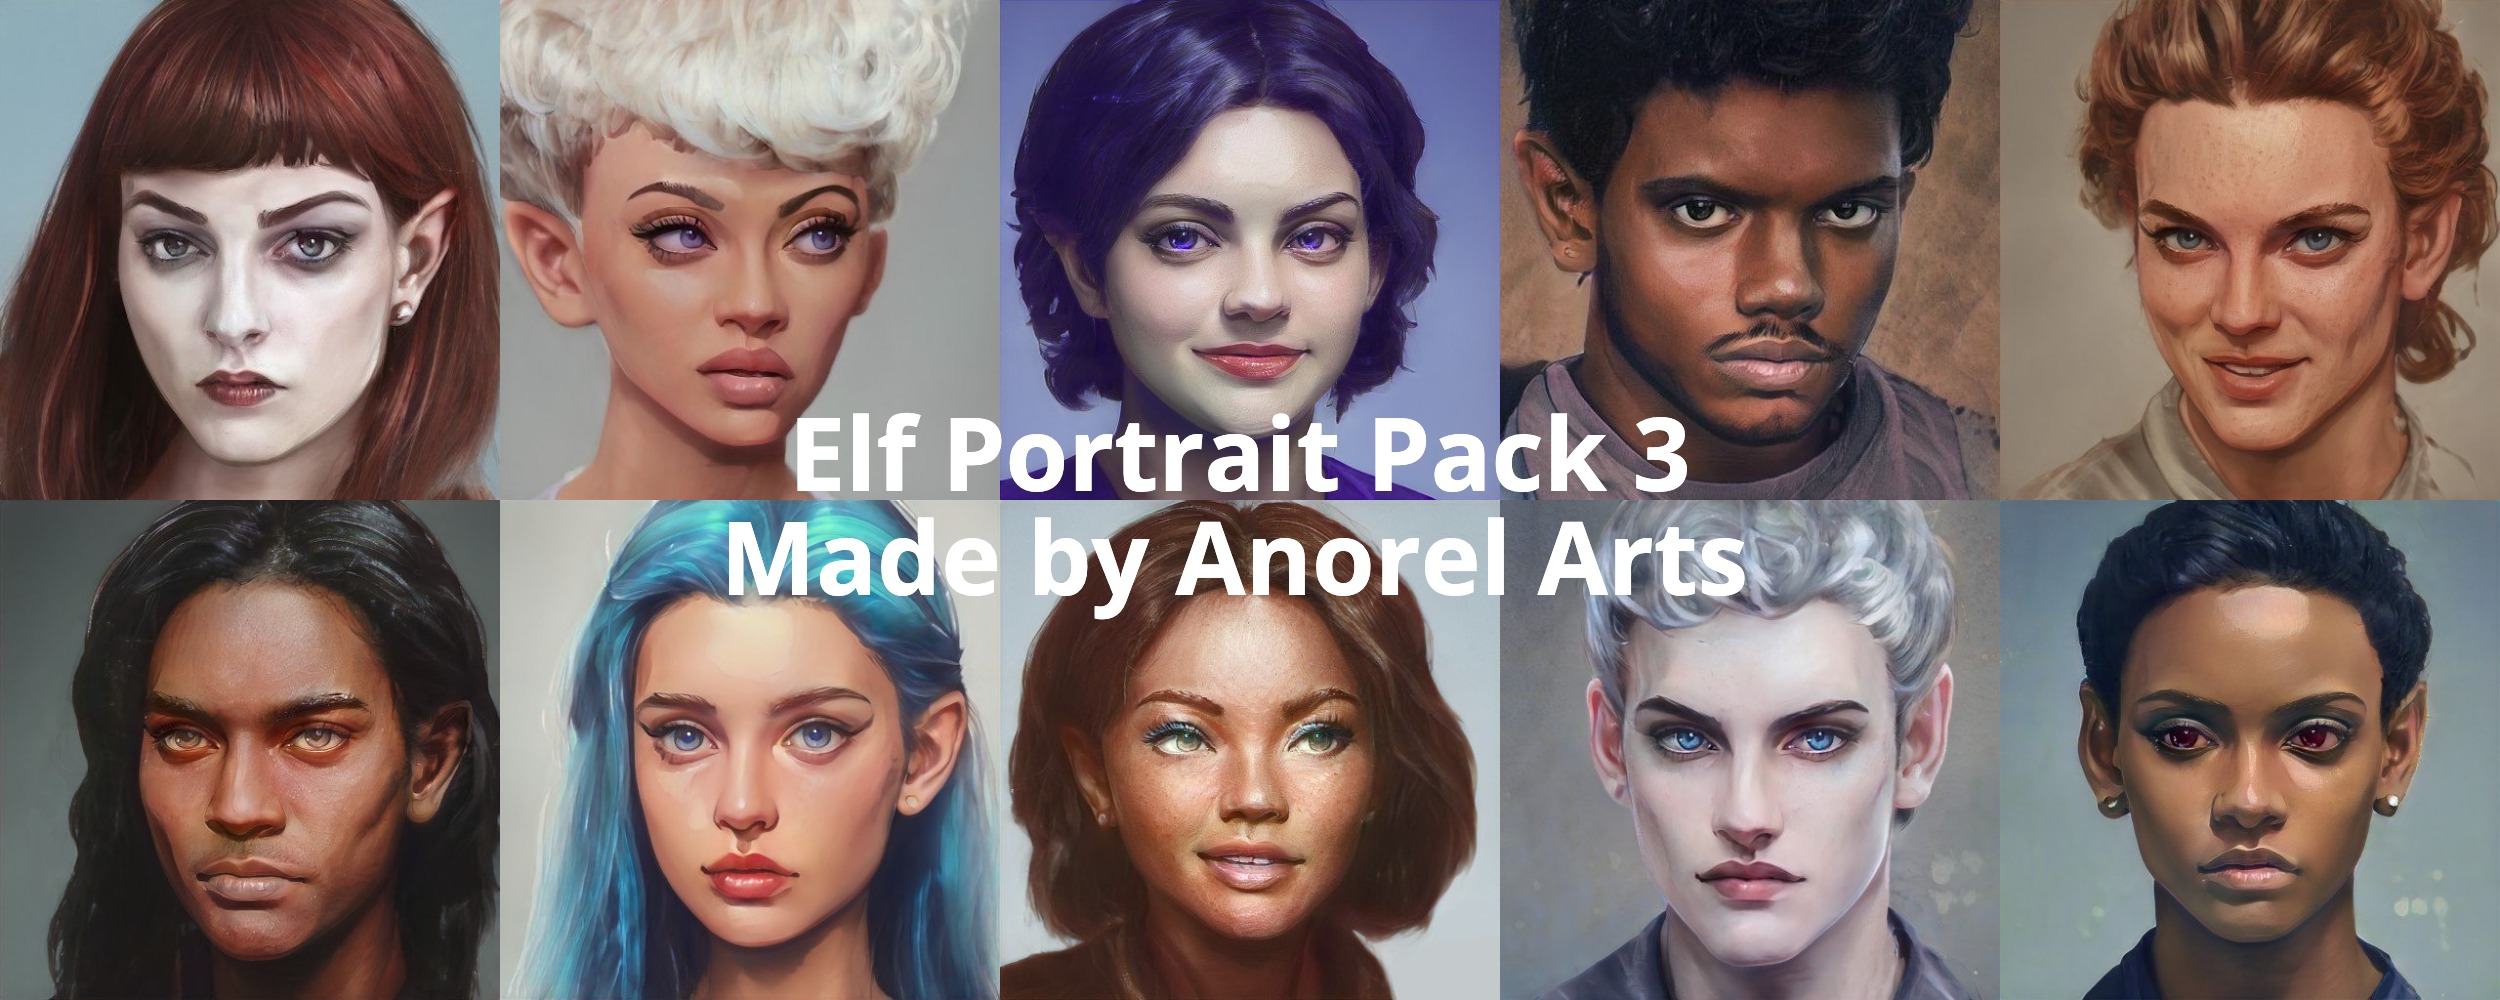 Elf Portrait Pack 3